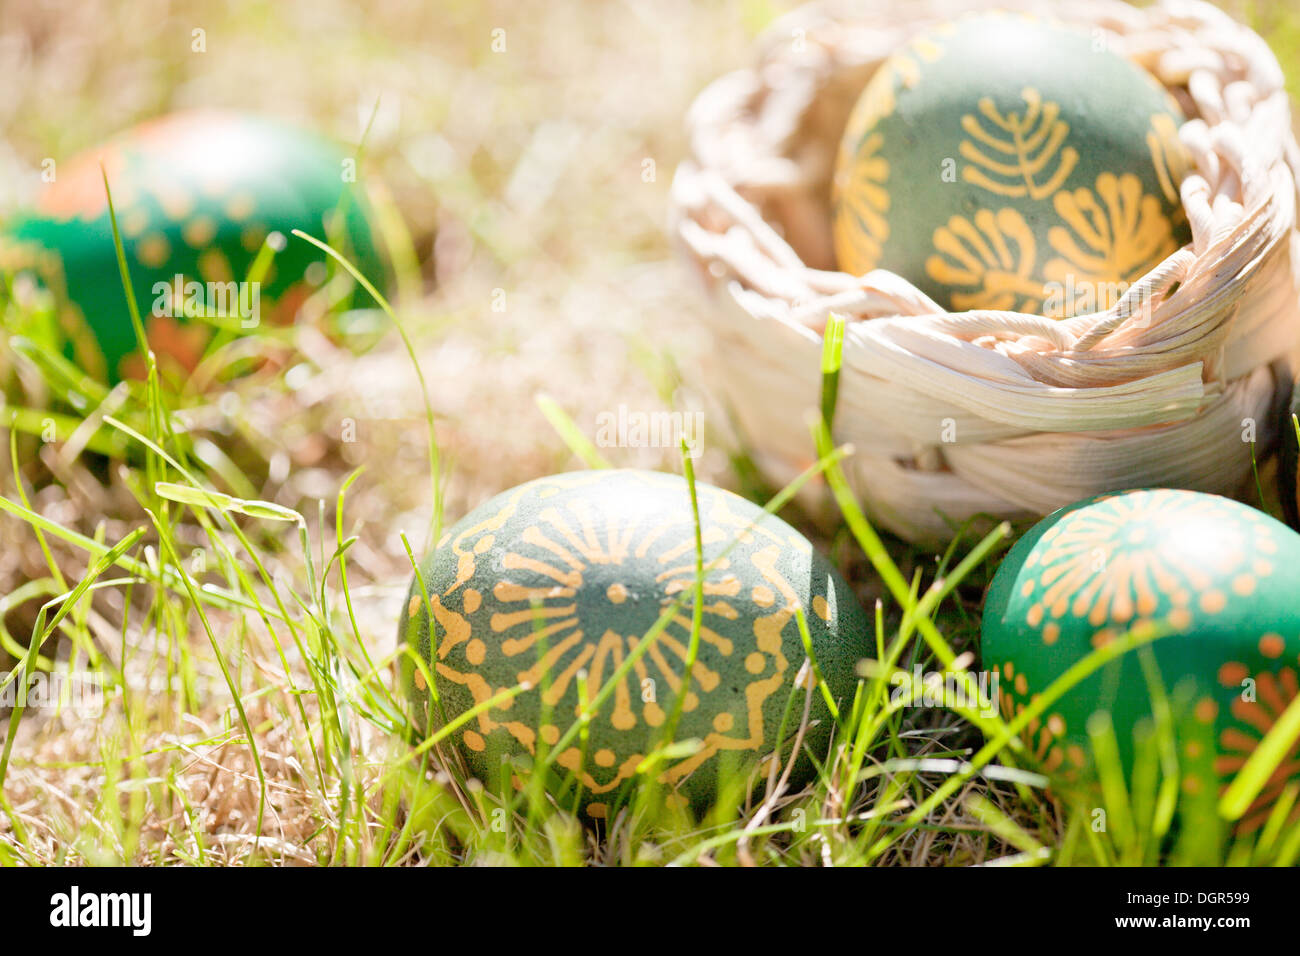 Hermosos huevos de Pascua decorados con cera de abeja Foto de stock